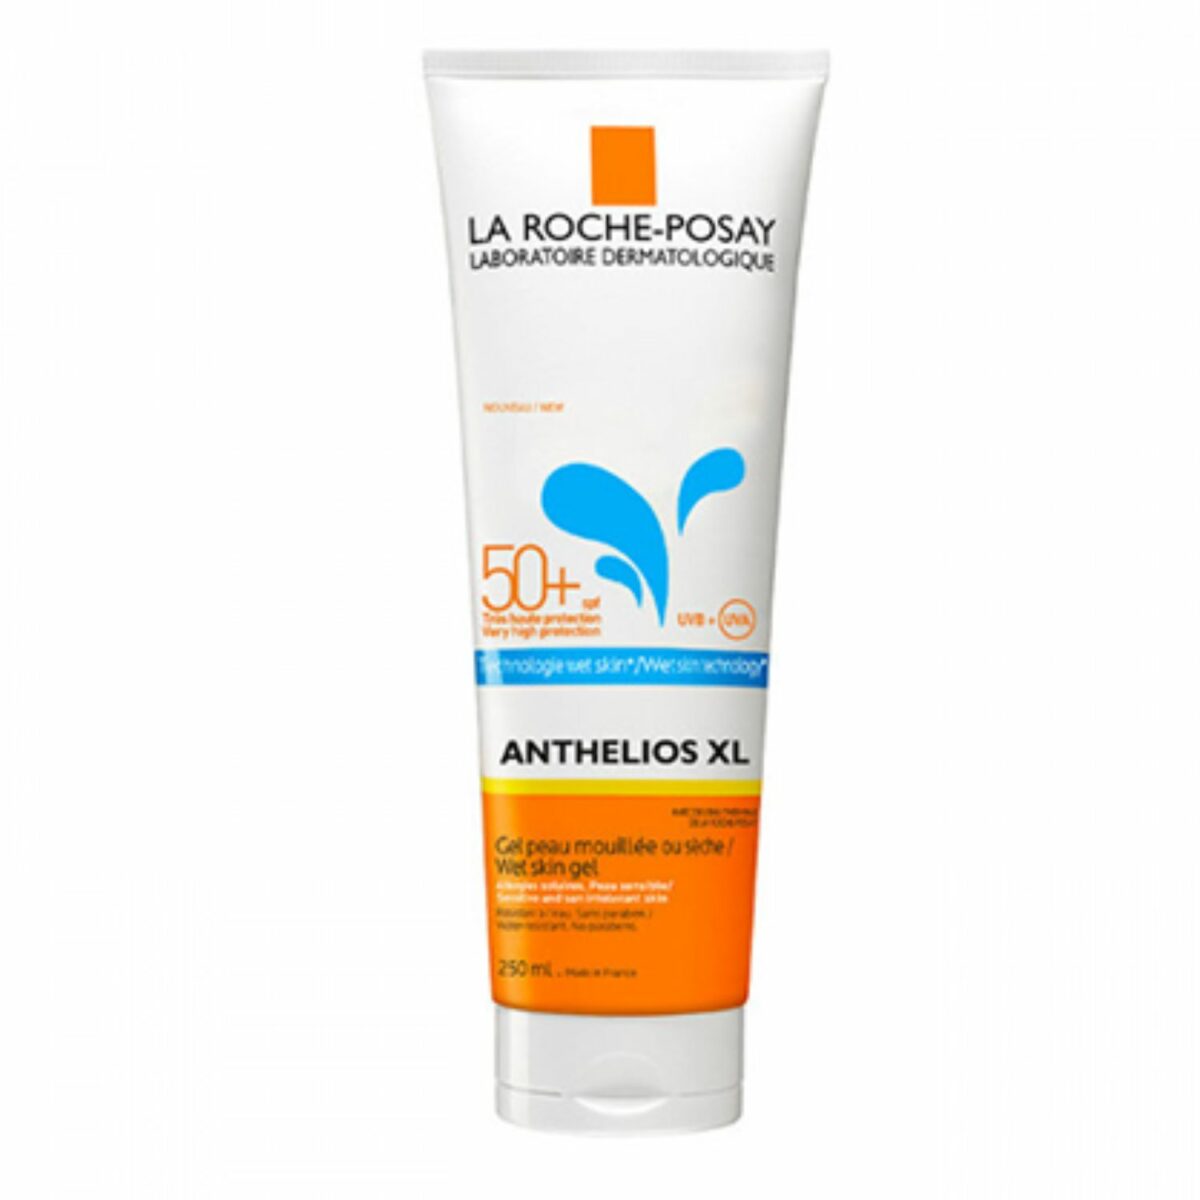 La Roche-Posay Anthelios mleko wet skin 50+ 250ml